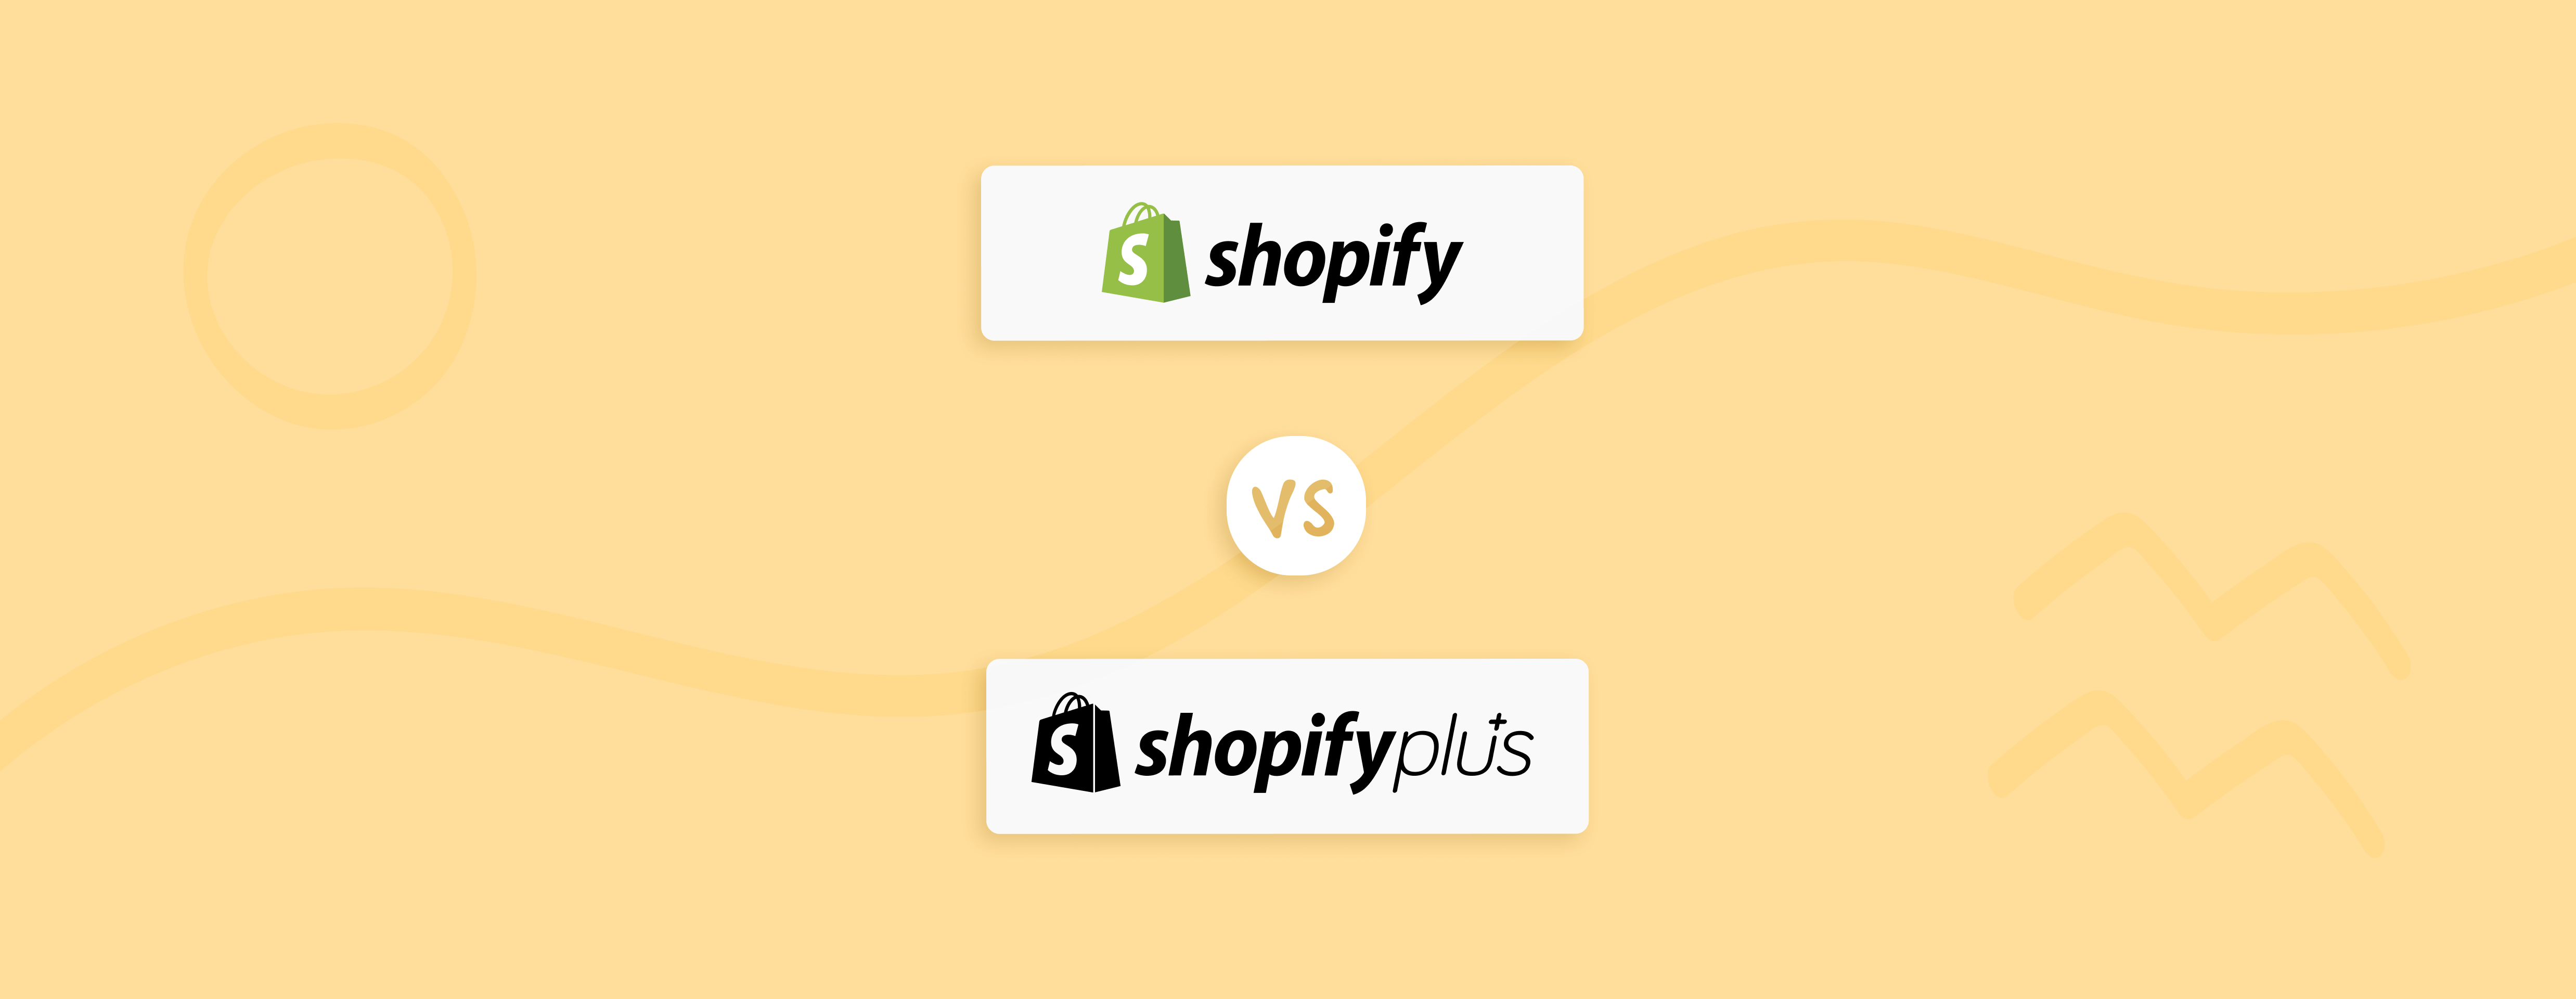 shopify vs shopify plus cover photo